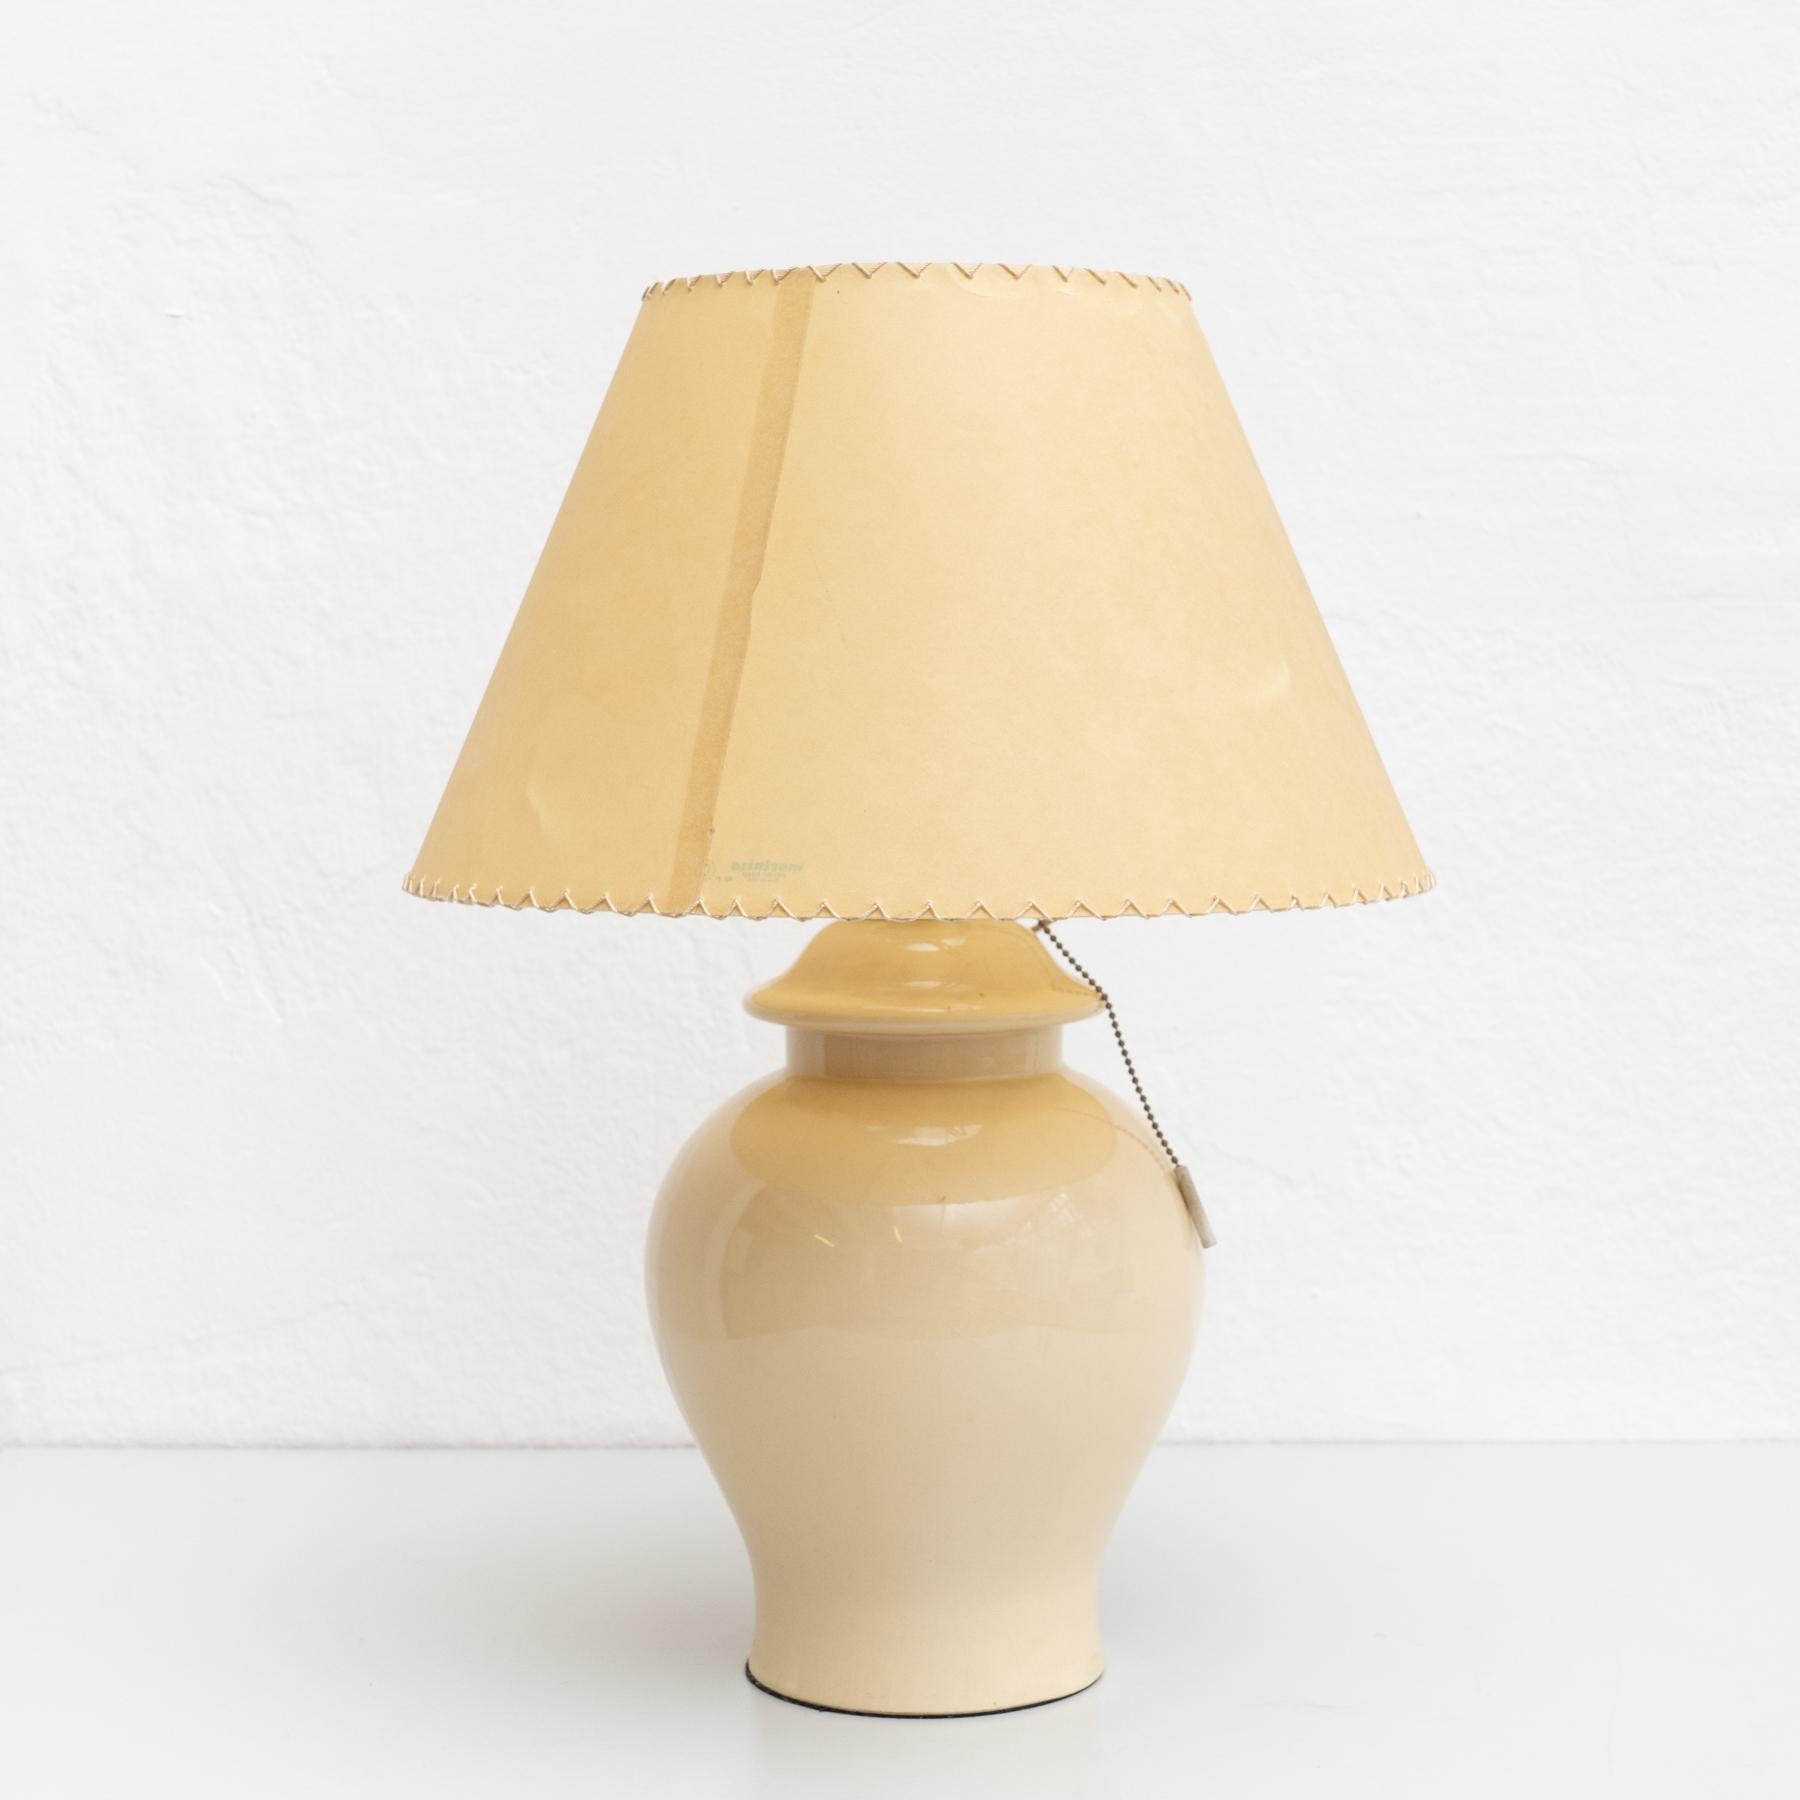 Spanish Ceramic Mid Century Modern Table Lamp, circa 1970 For Sale